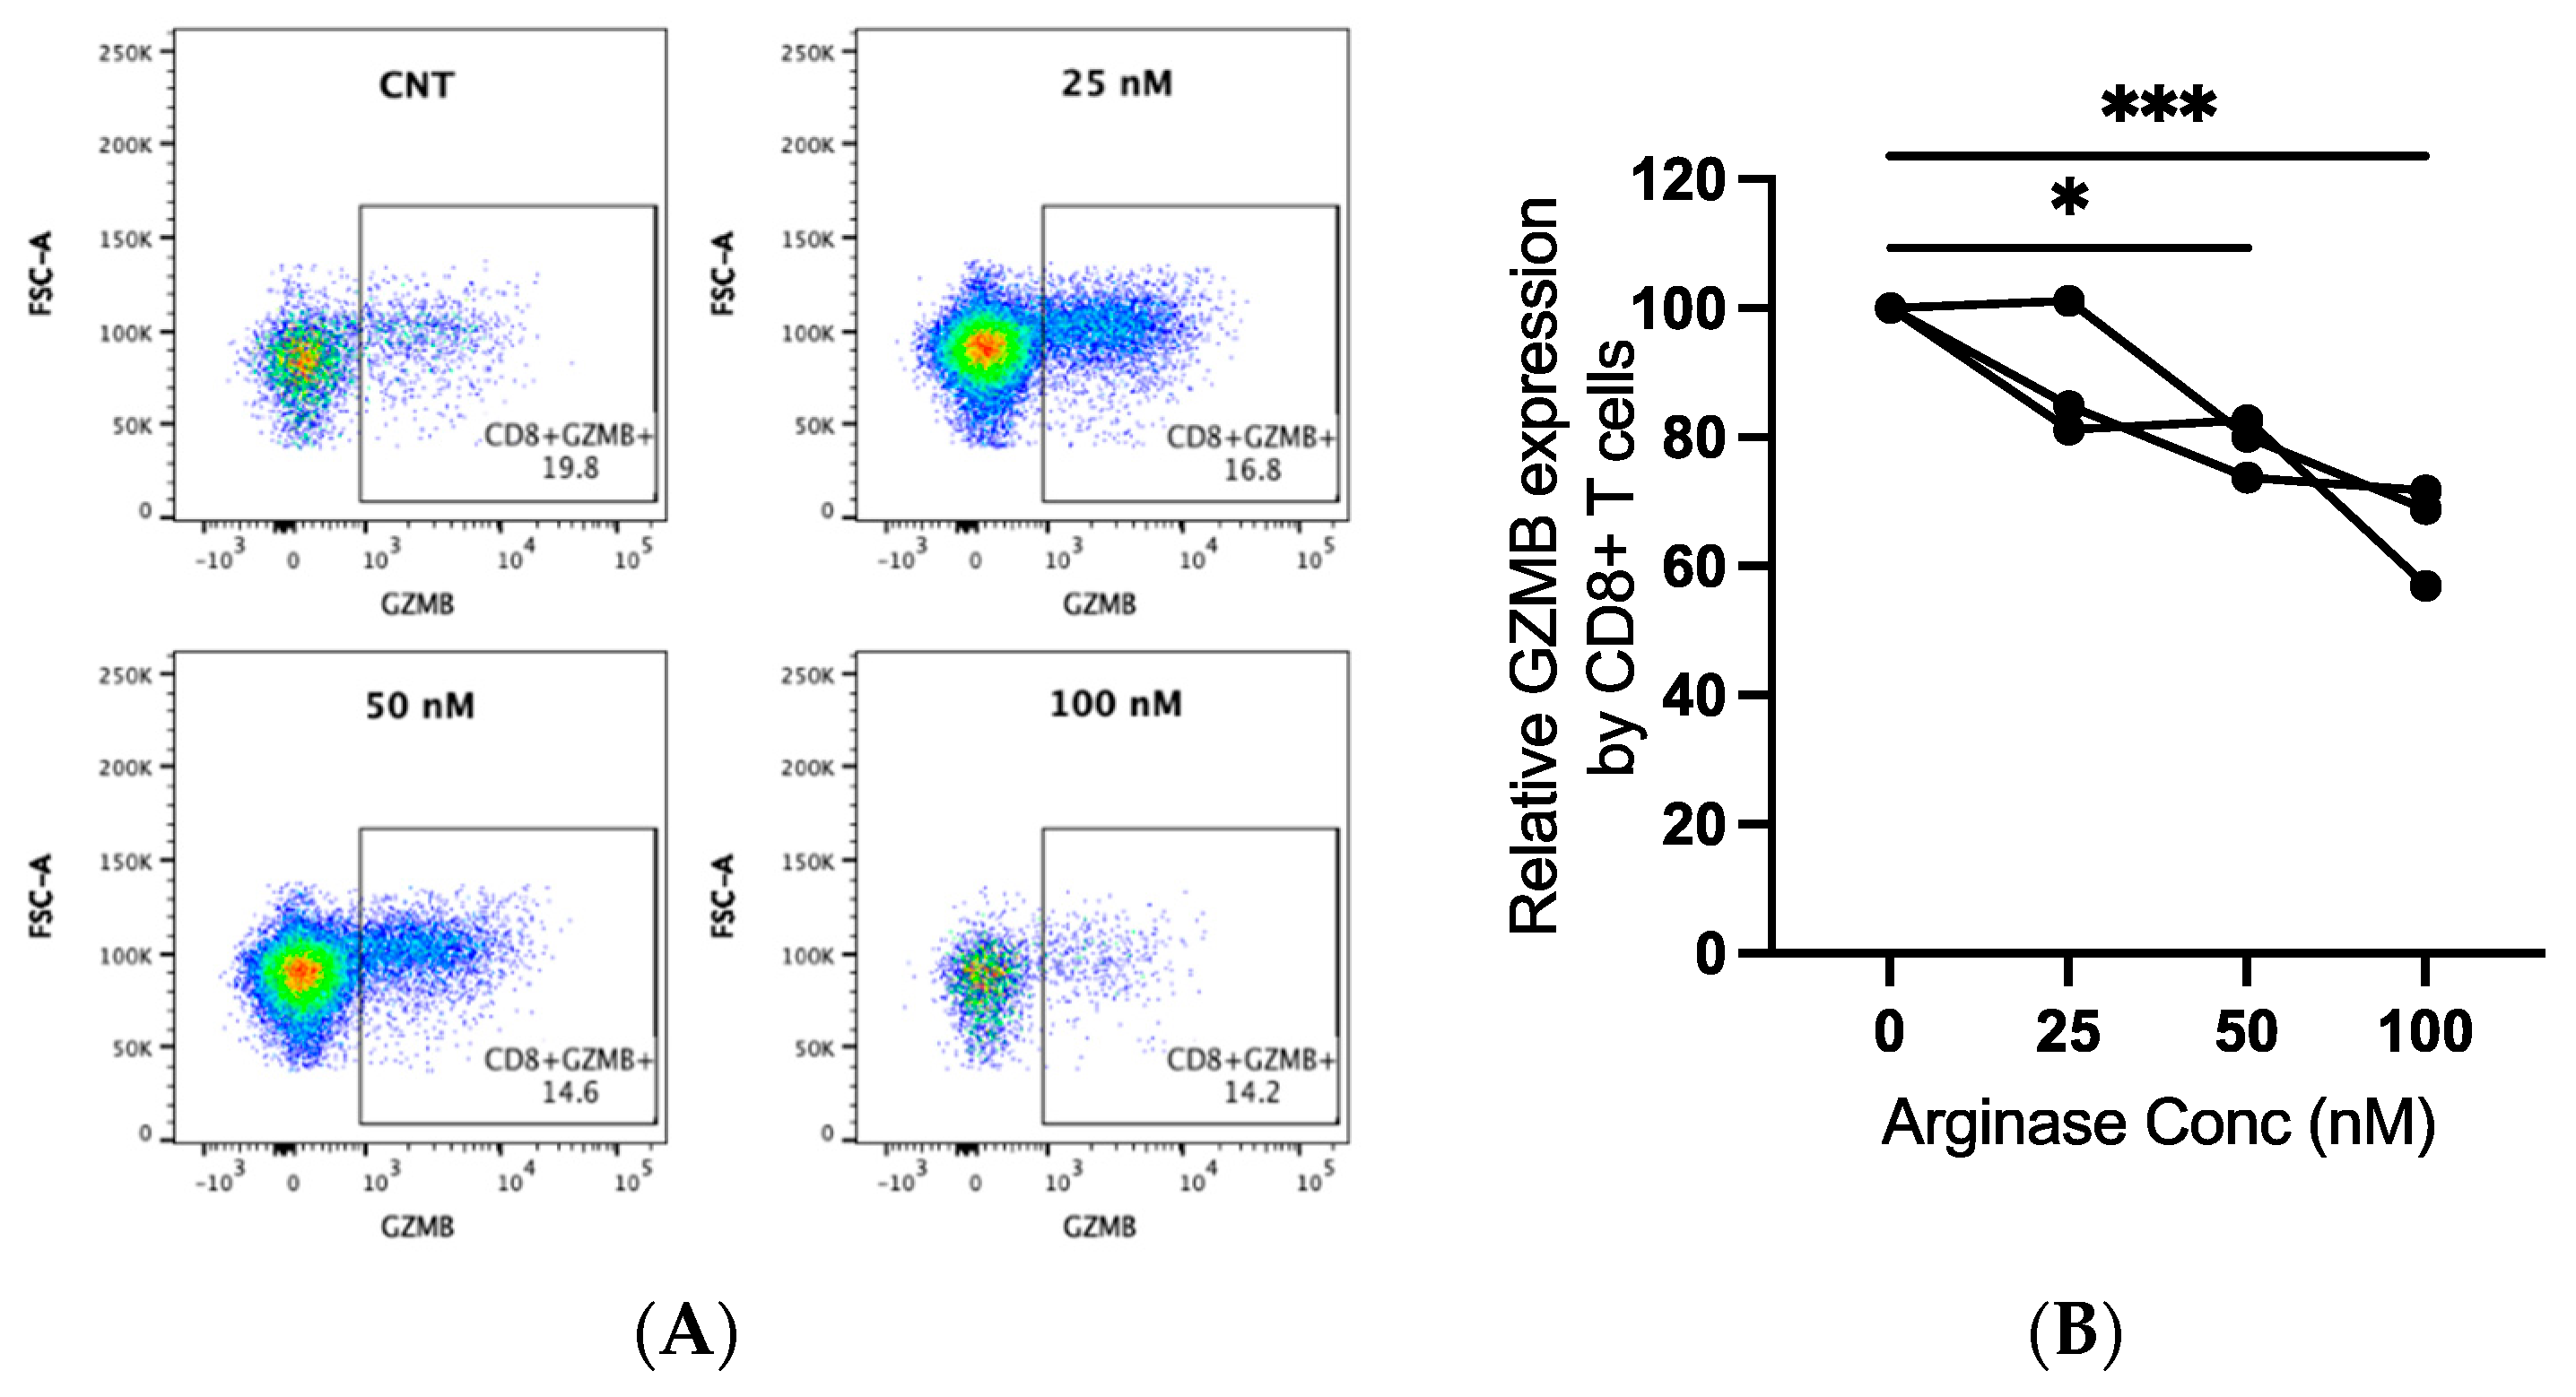 Impact of arginase on gzmb expression by canine lymphocytes